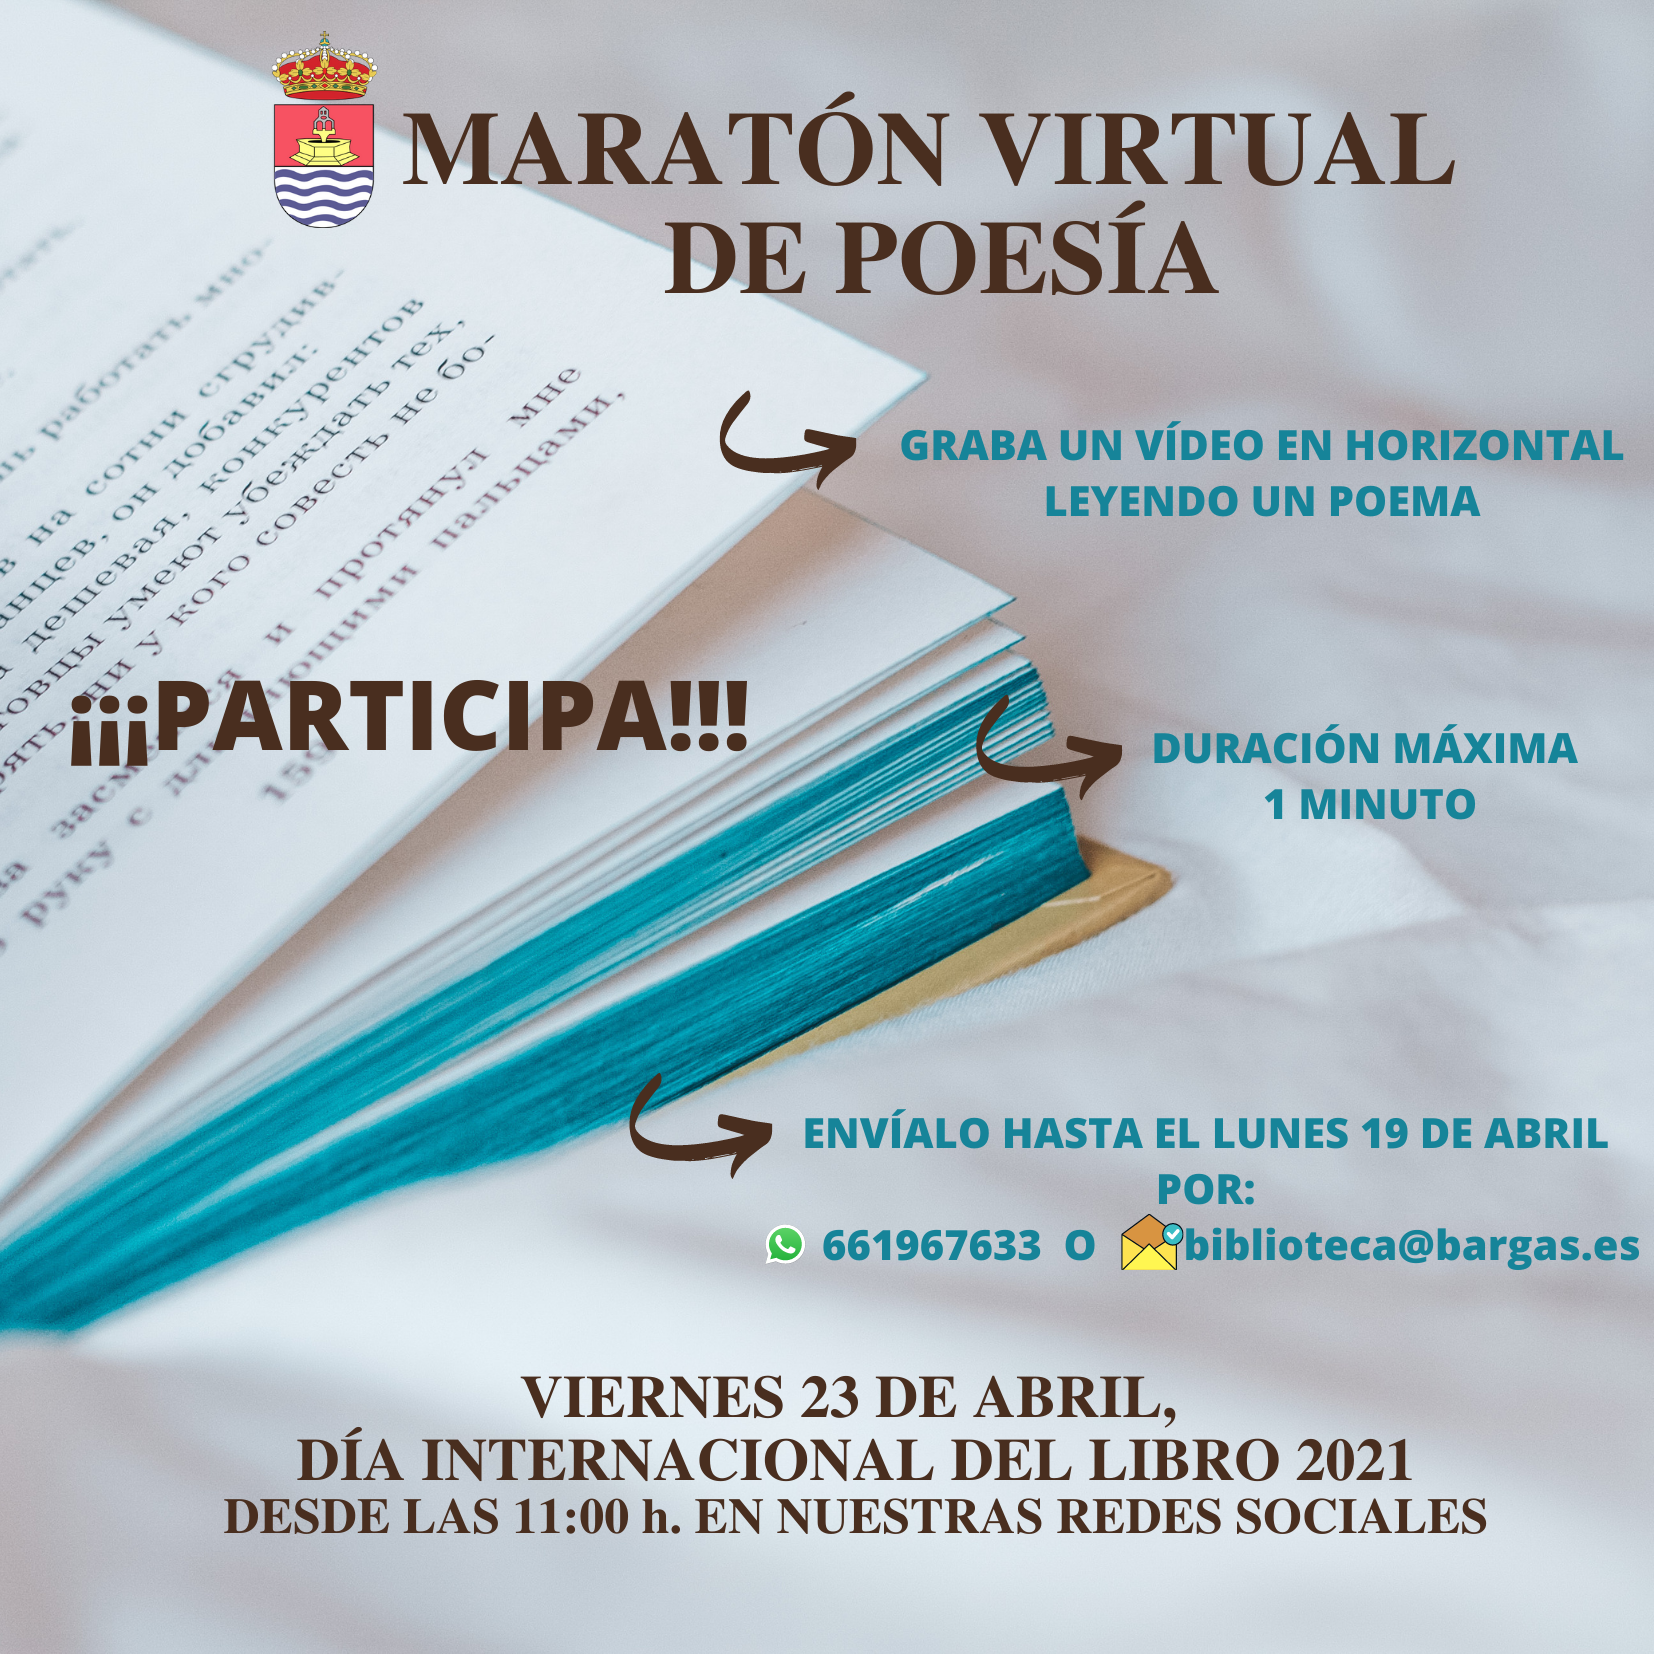 Maratón virtual de poesía